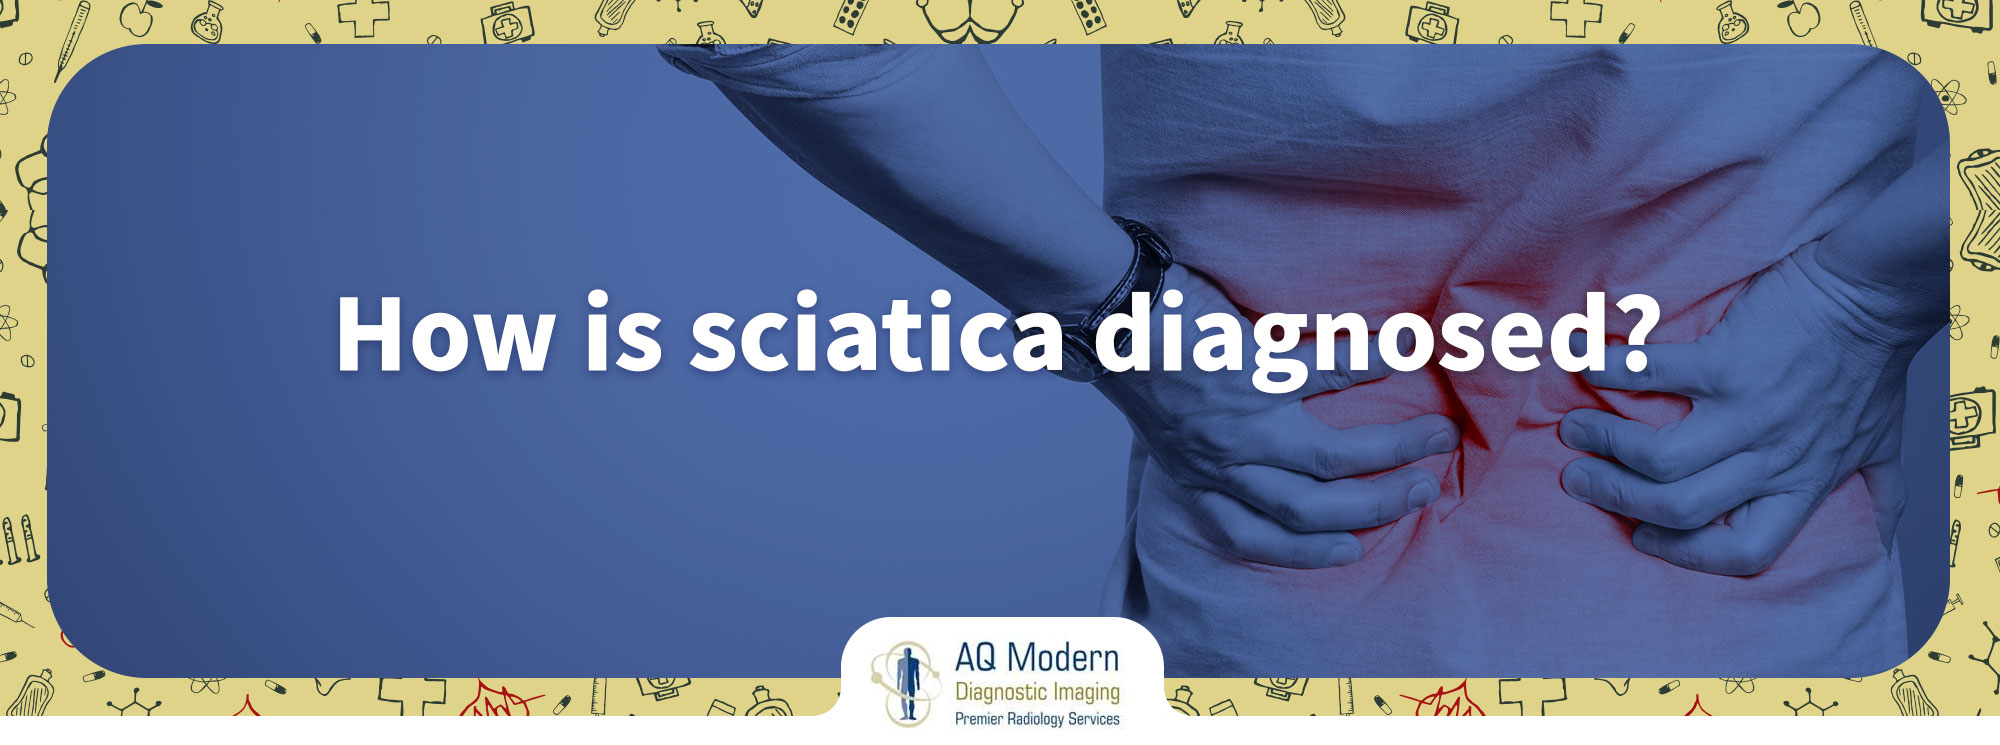 Sciatica Symptoms, Diagnosis & Treatment